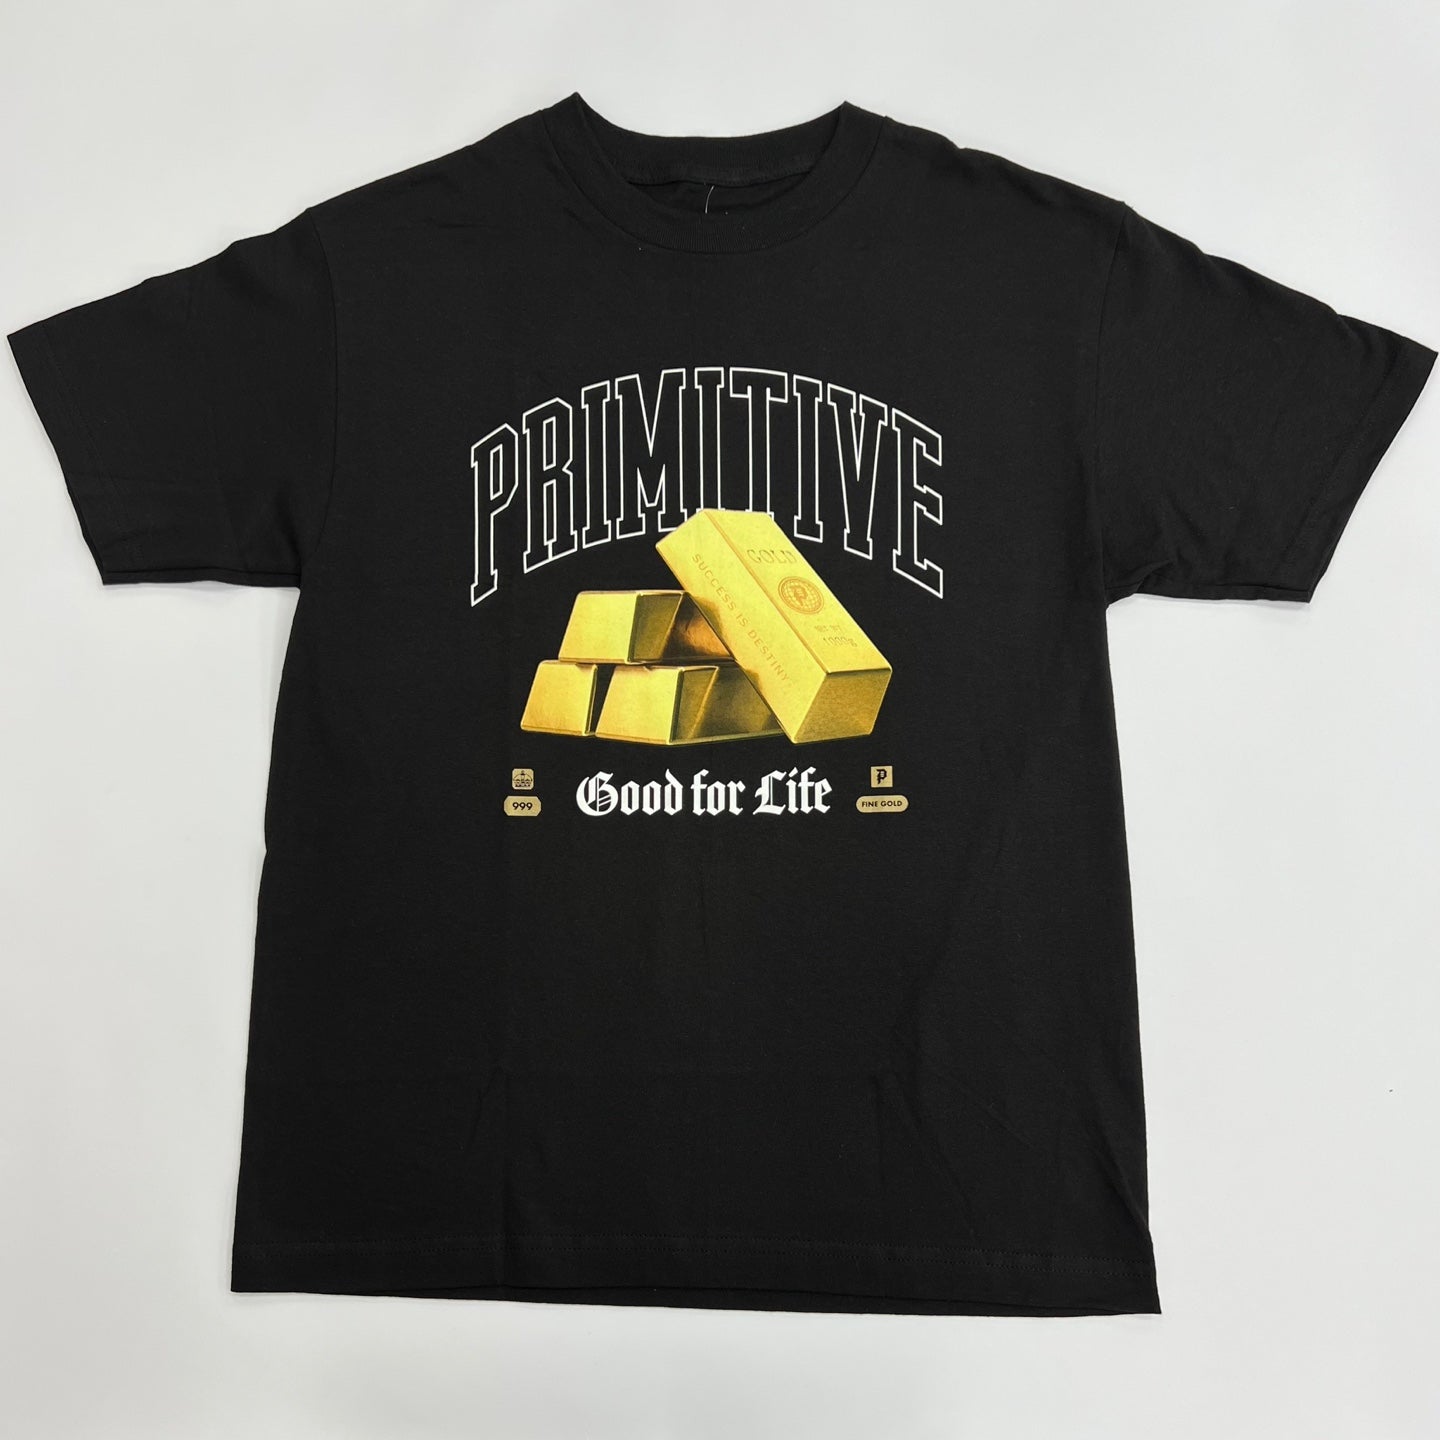 Primitive Good for Life Graphic T-Shirt - Black